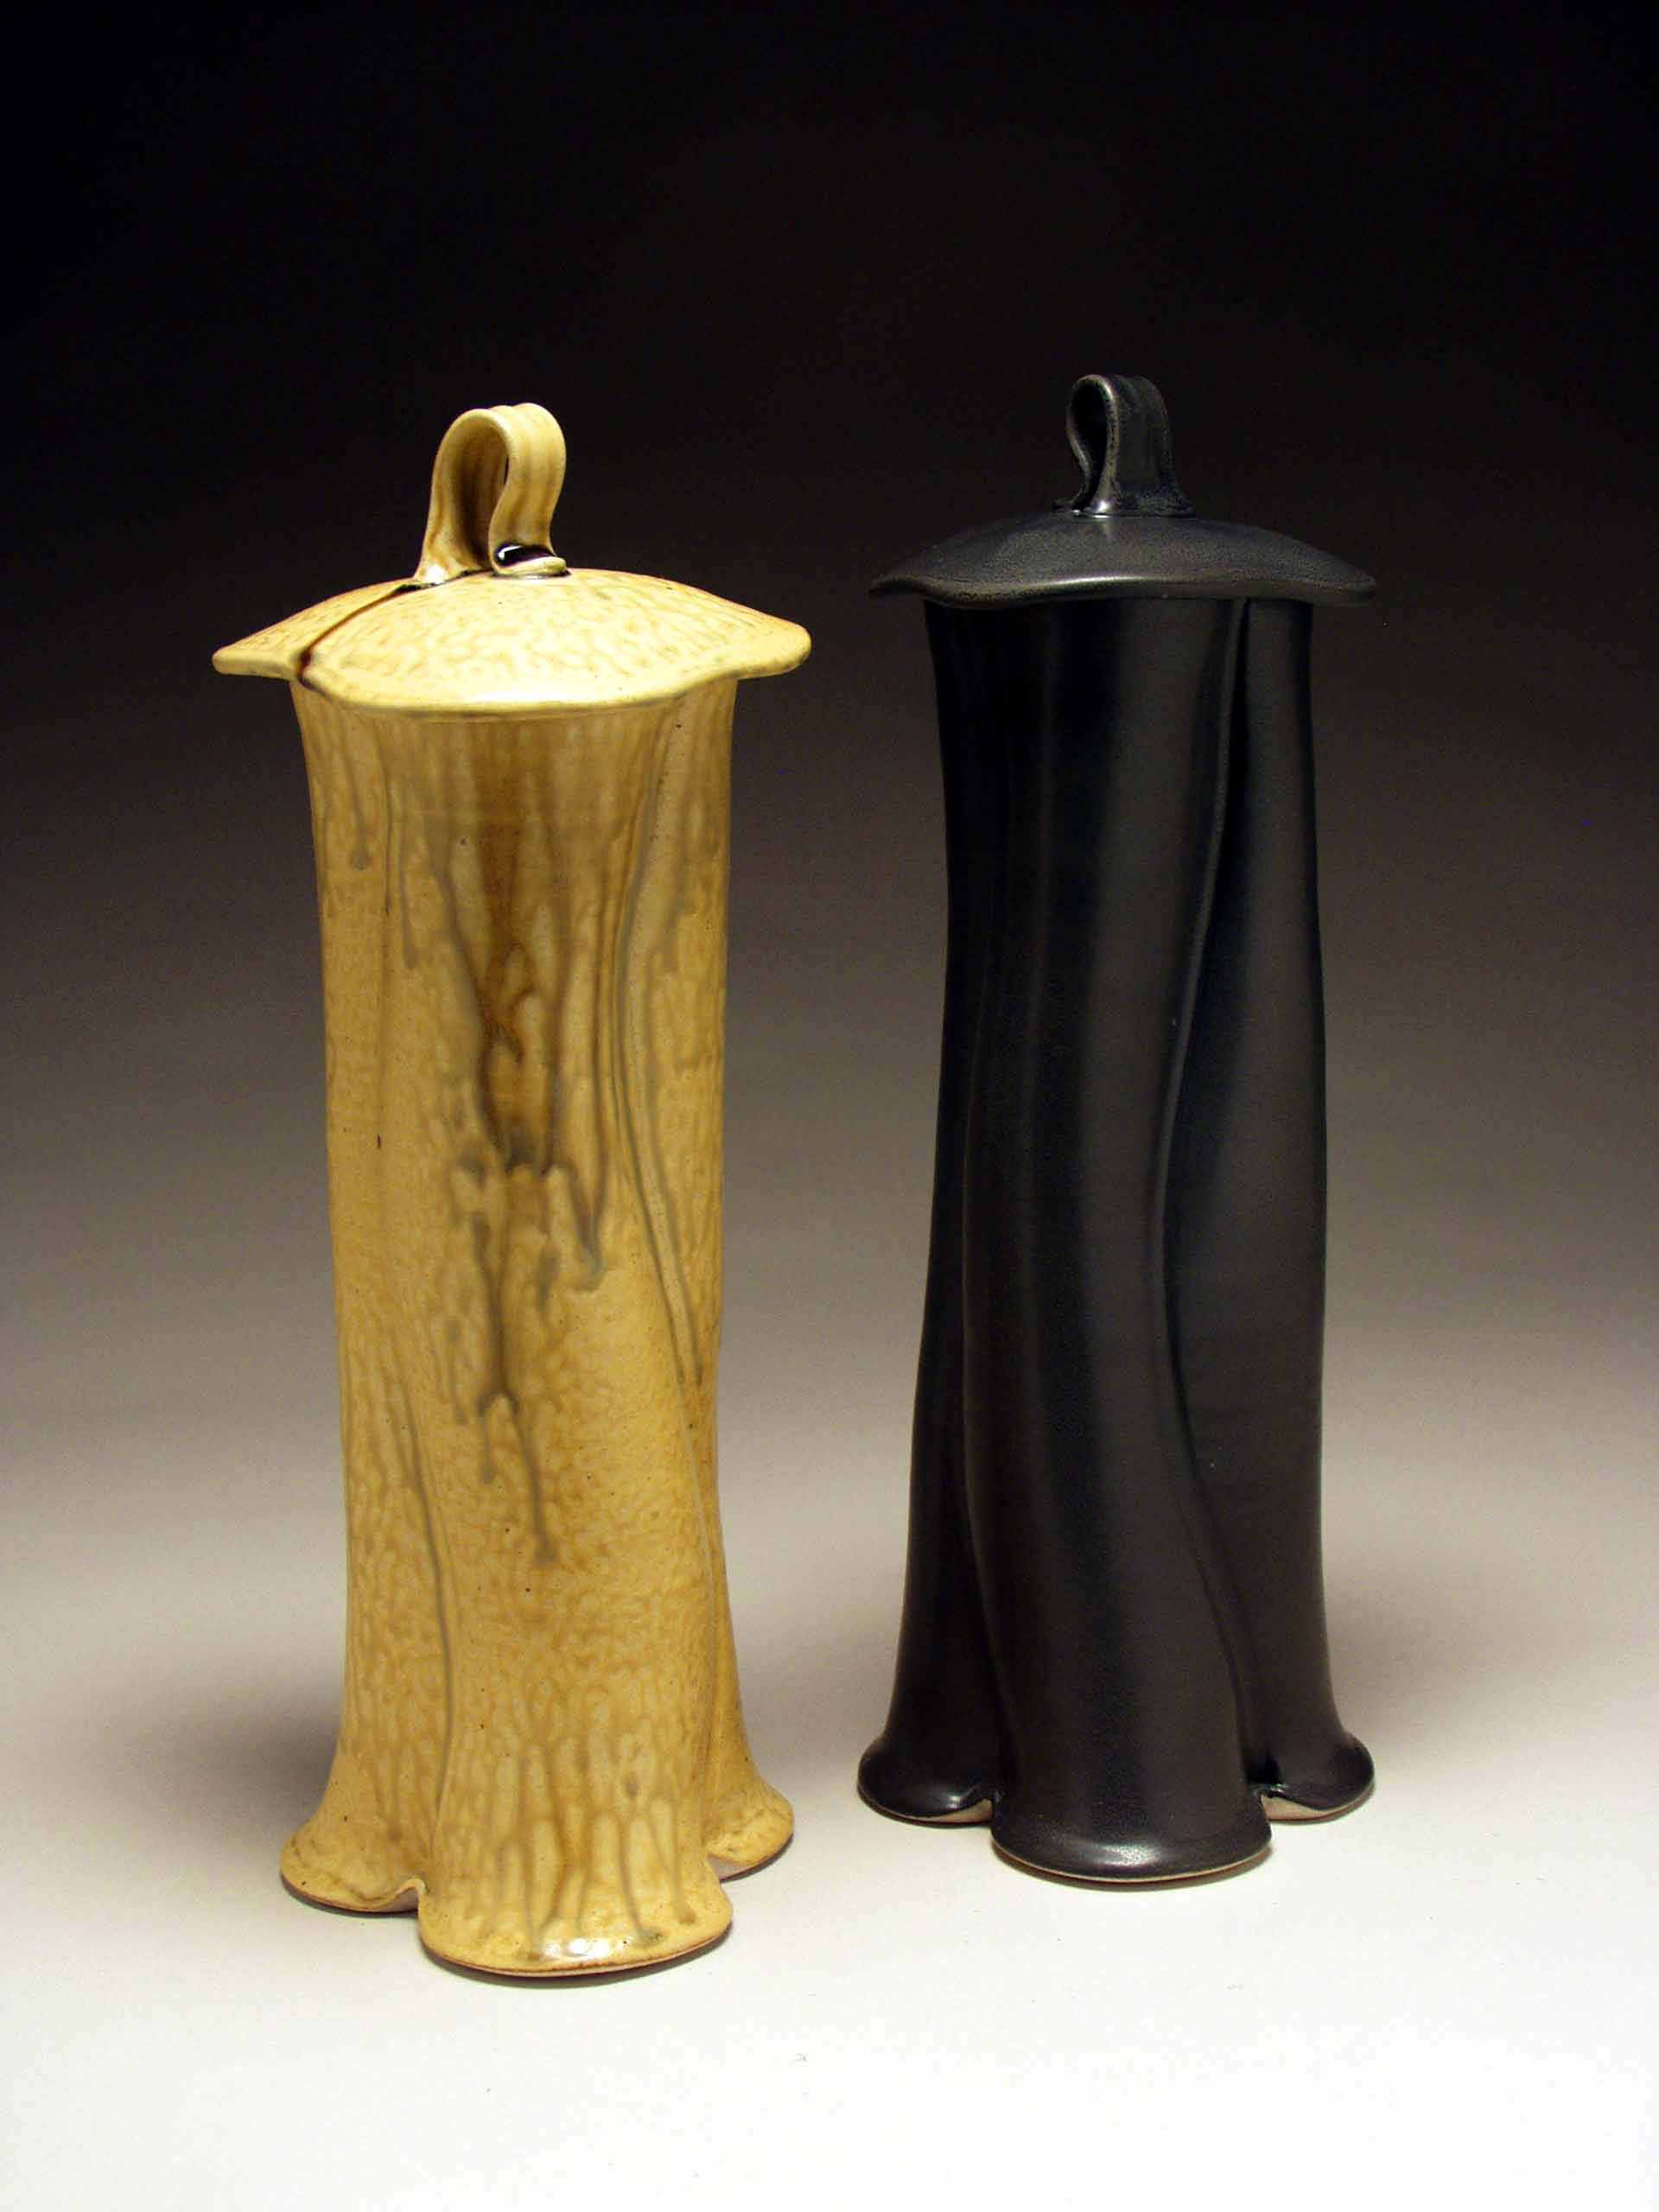 conner burns - pair of tall jars